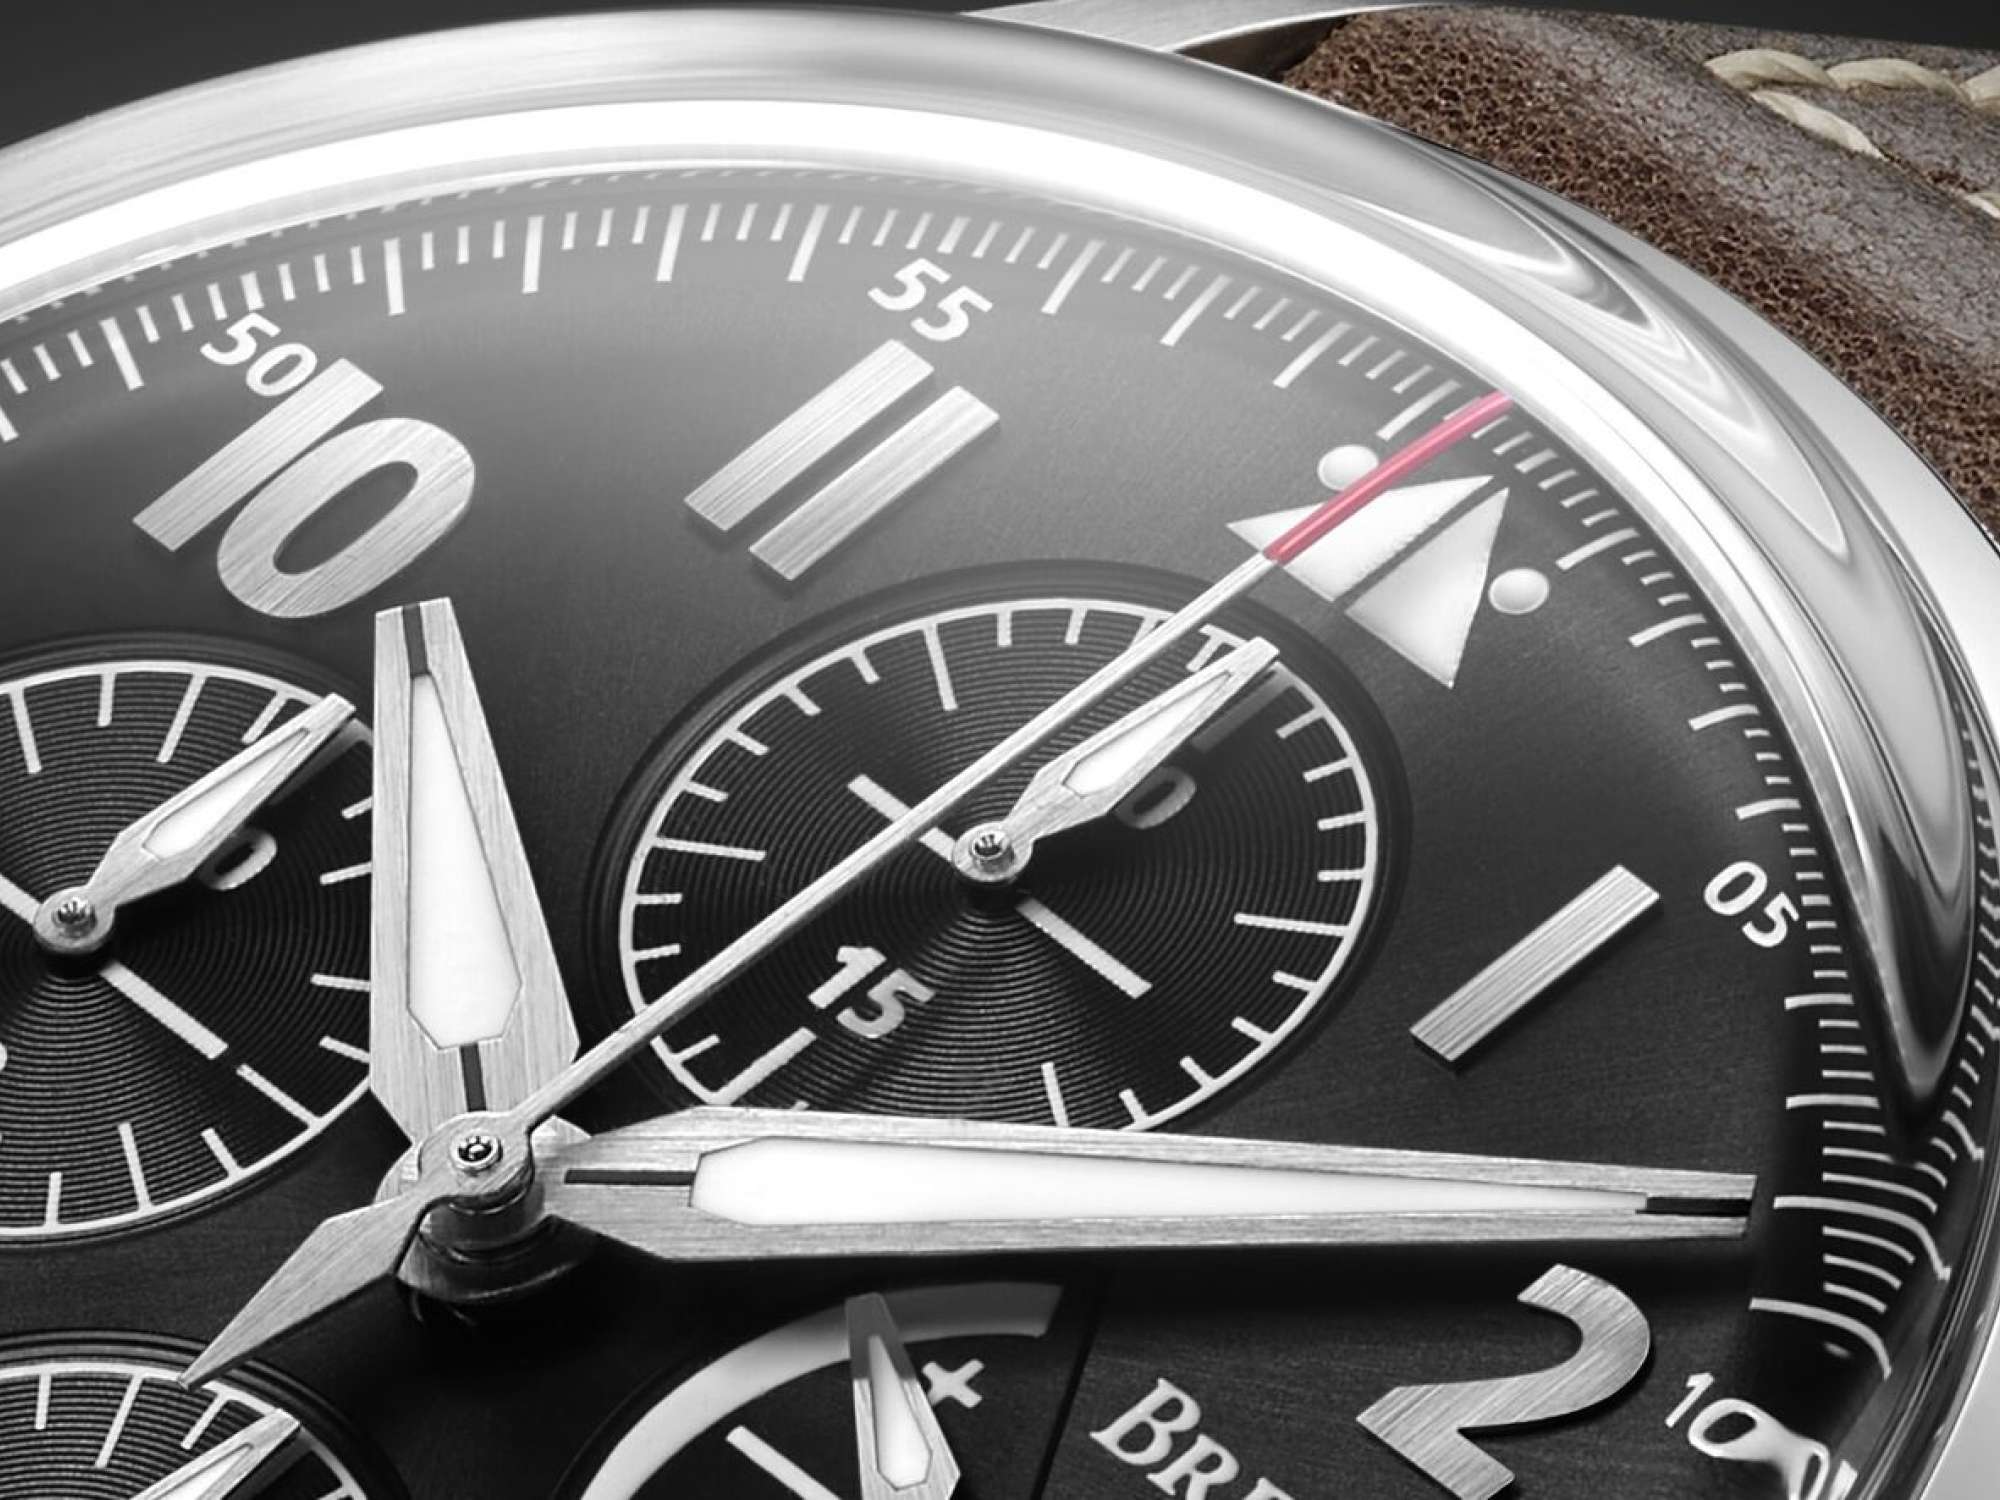 Brellum Pilot Power Reserve Chronometer – Swiss Time